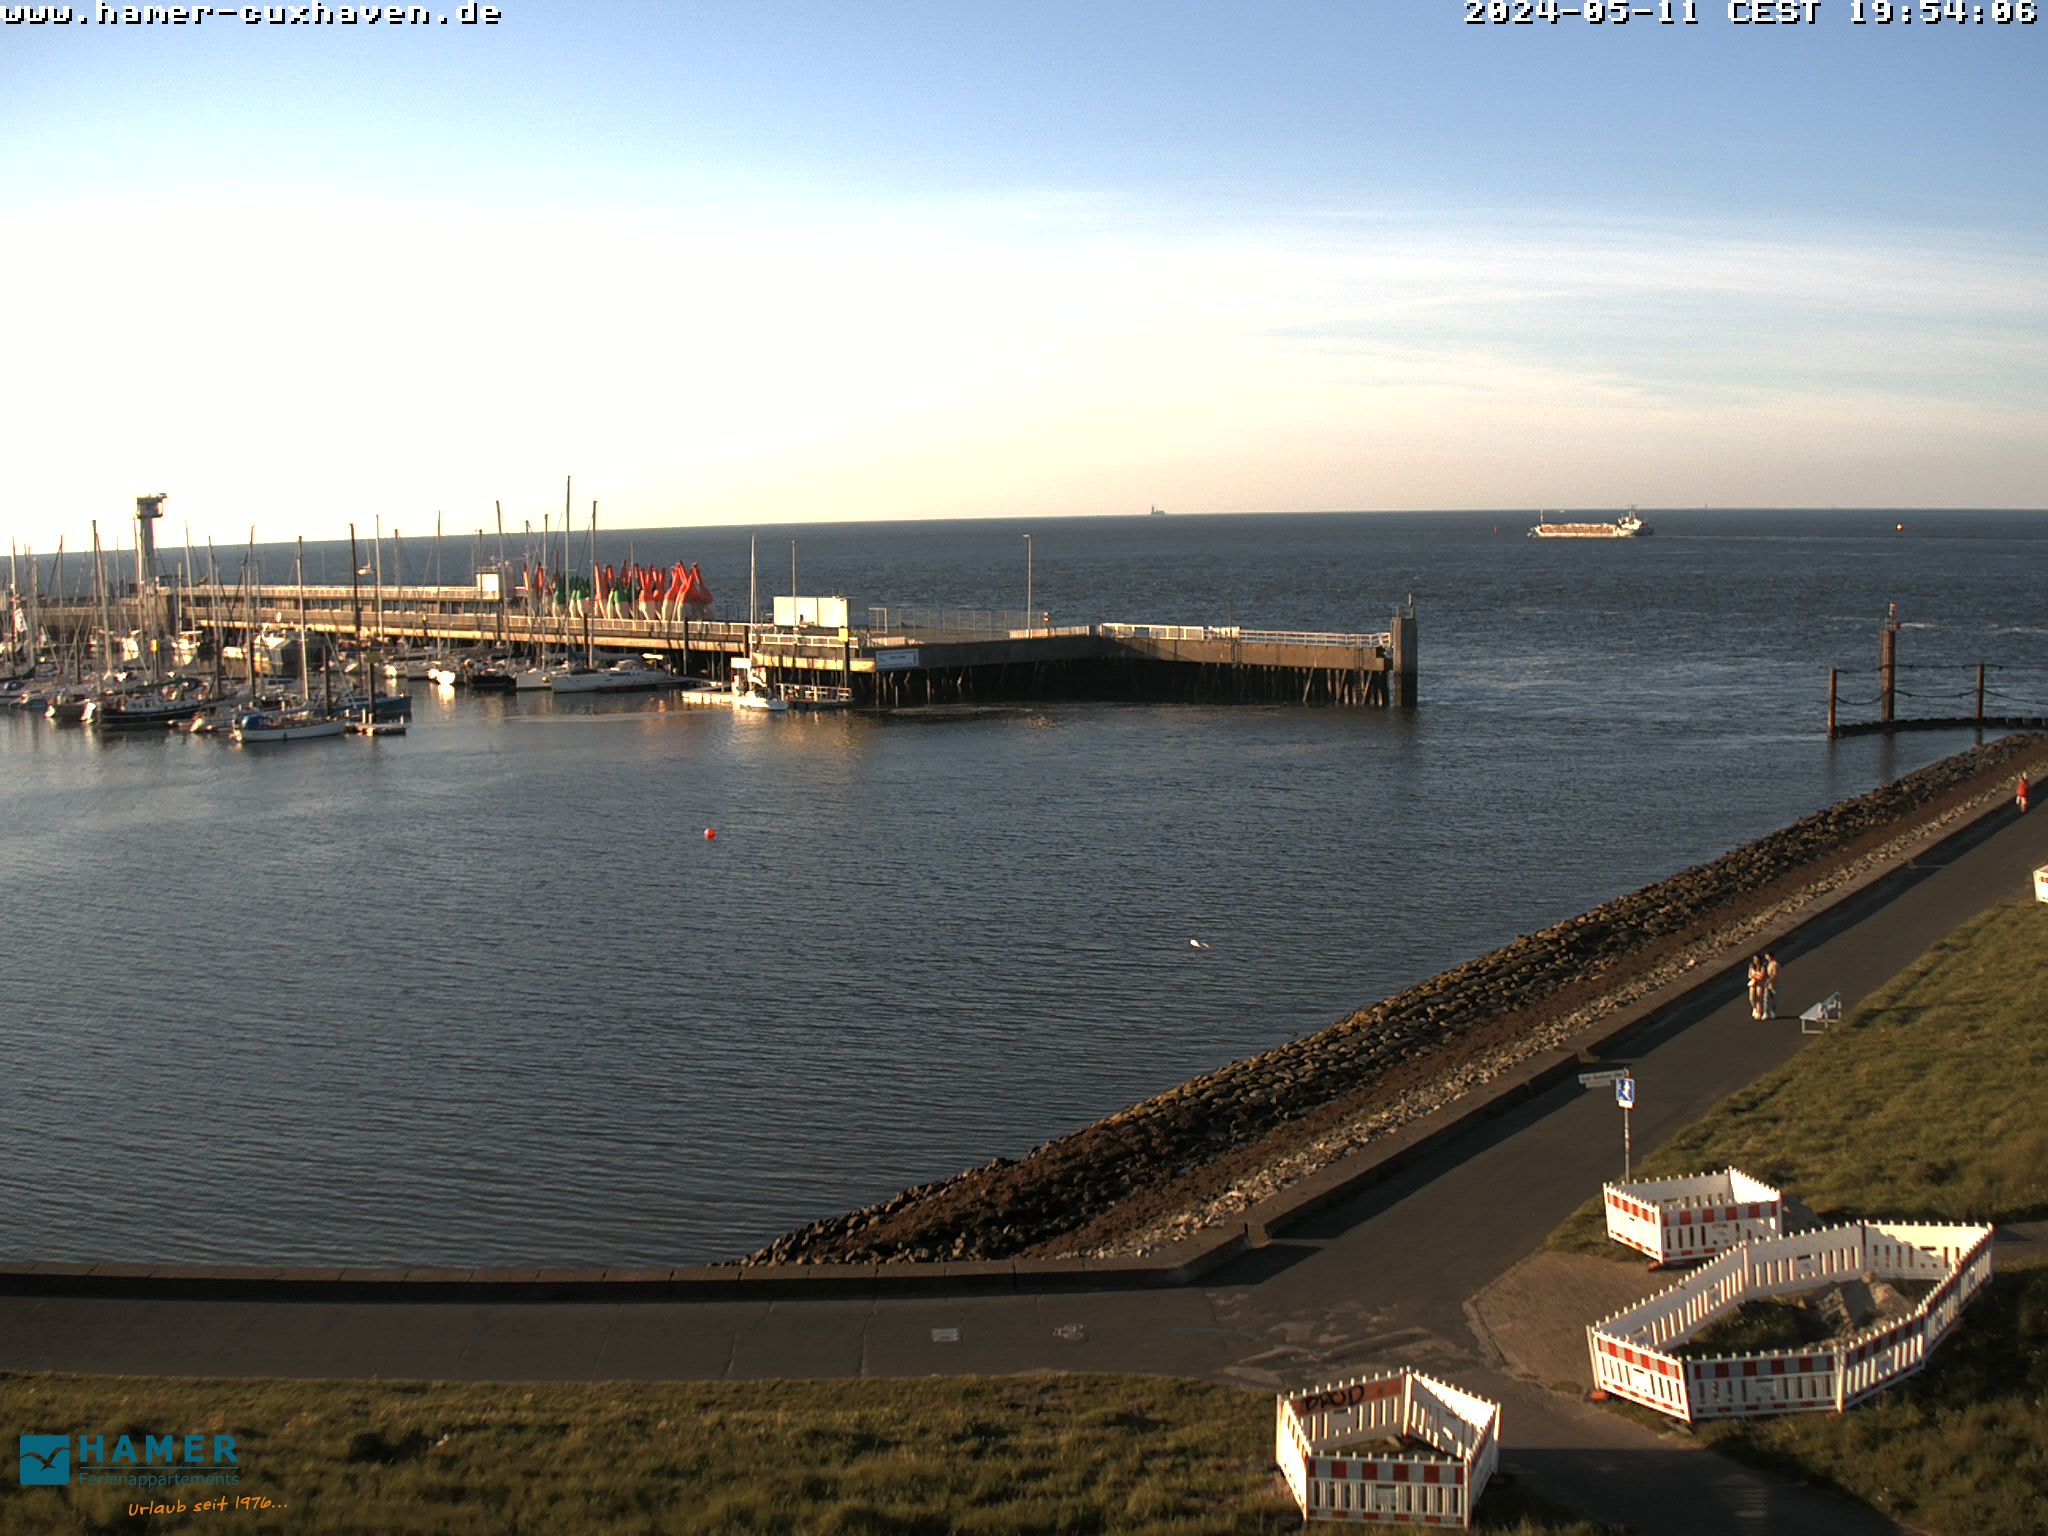 Cuxhaven Mer. 19:55